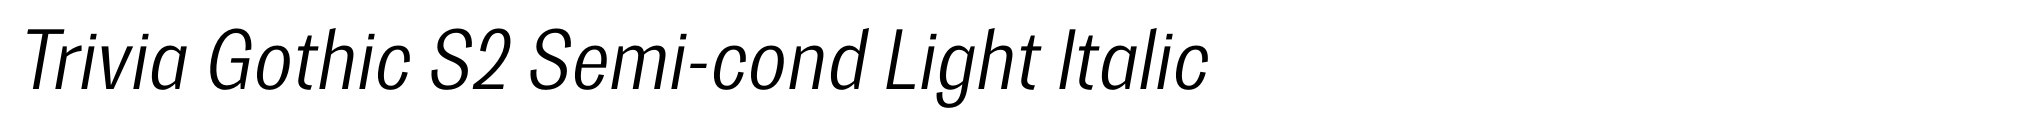 Trivia Gothic S2 Semi-cond Light Italic image